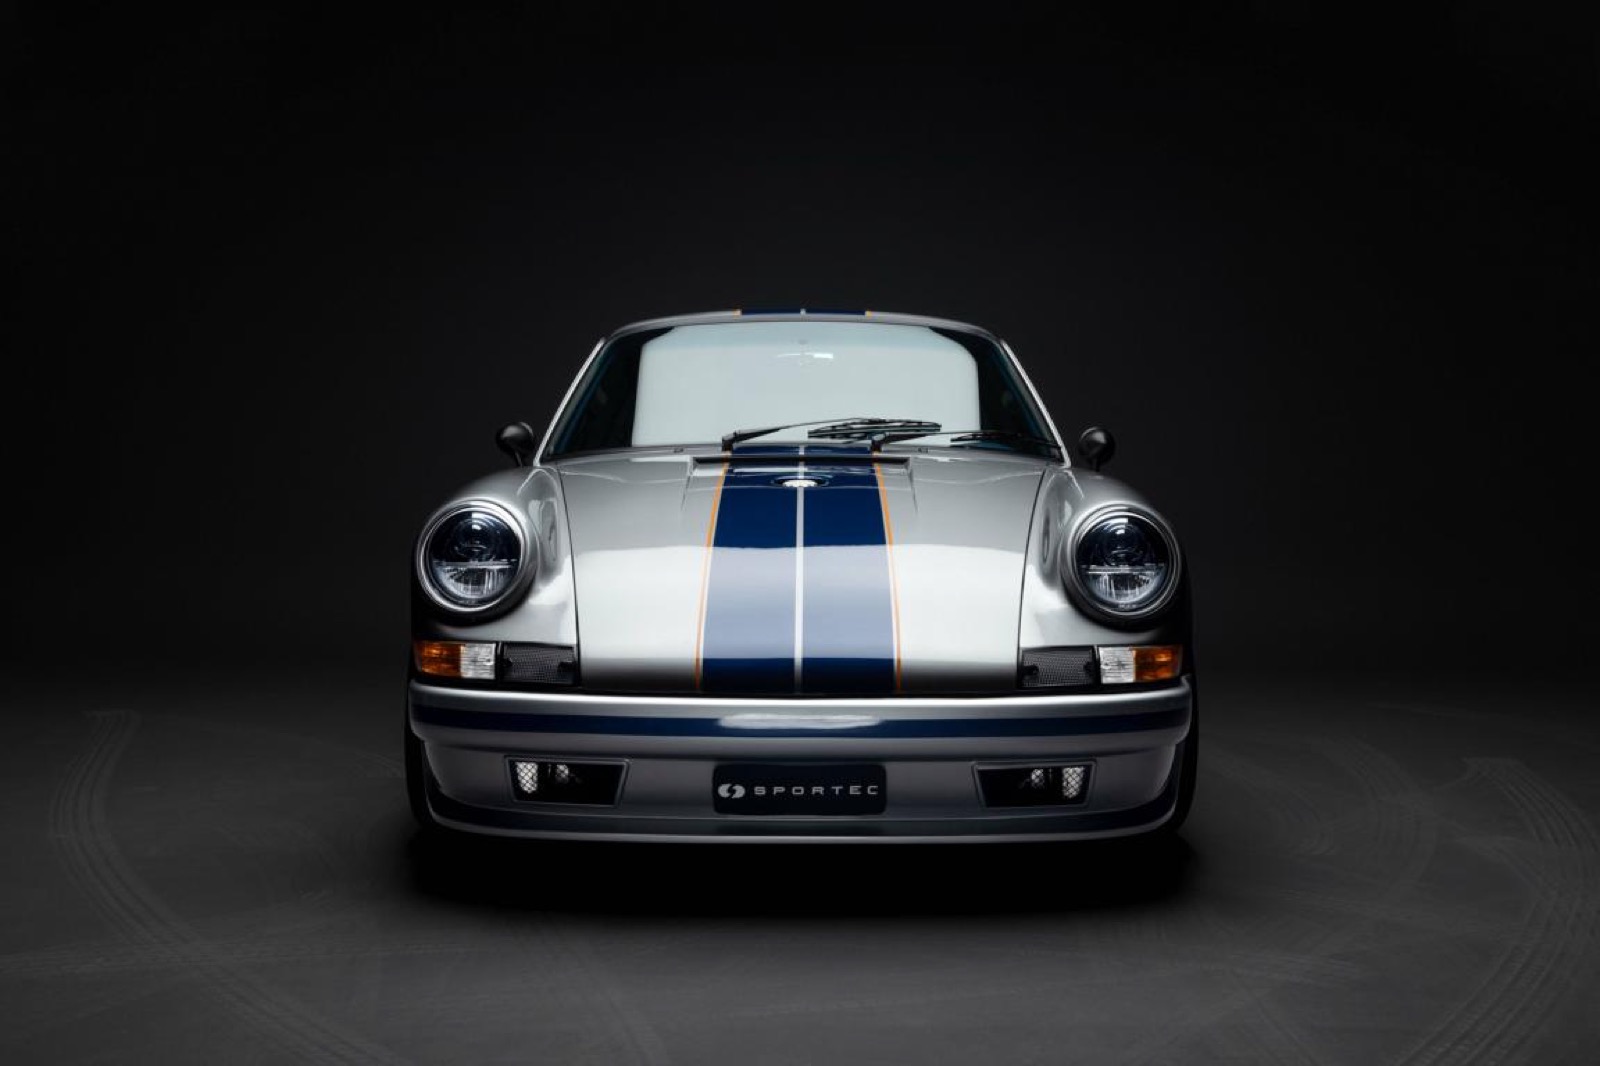 Porsche-911-964-Project-Ferdinand-restomod-Sportec-2